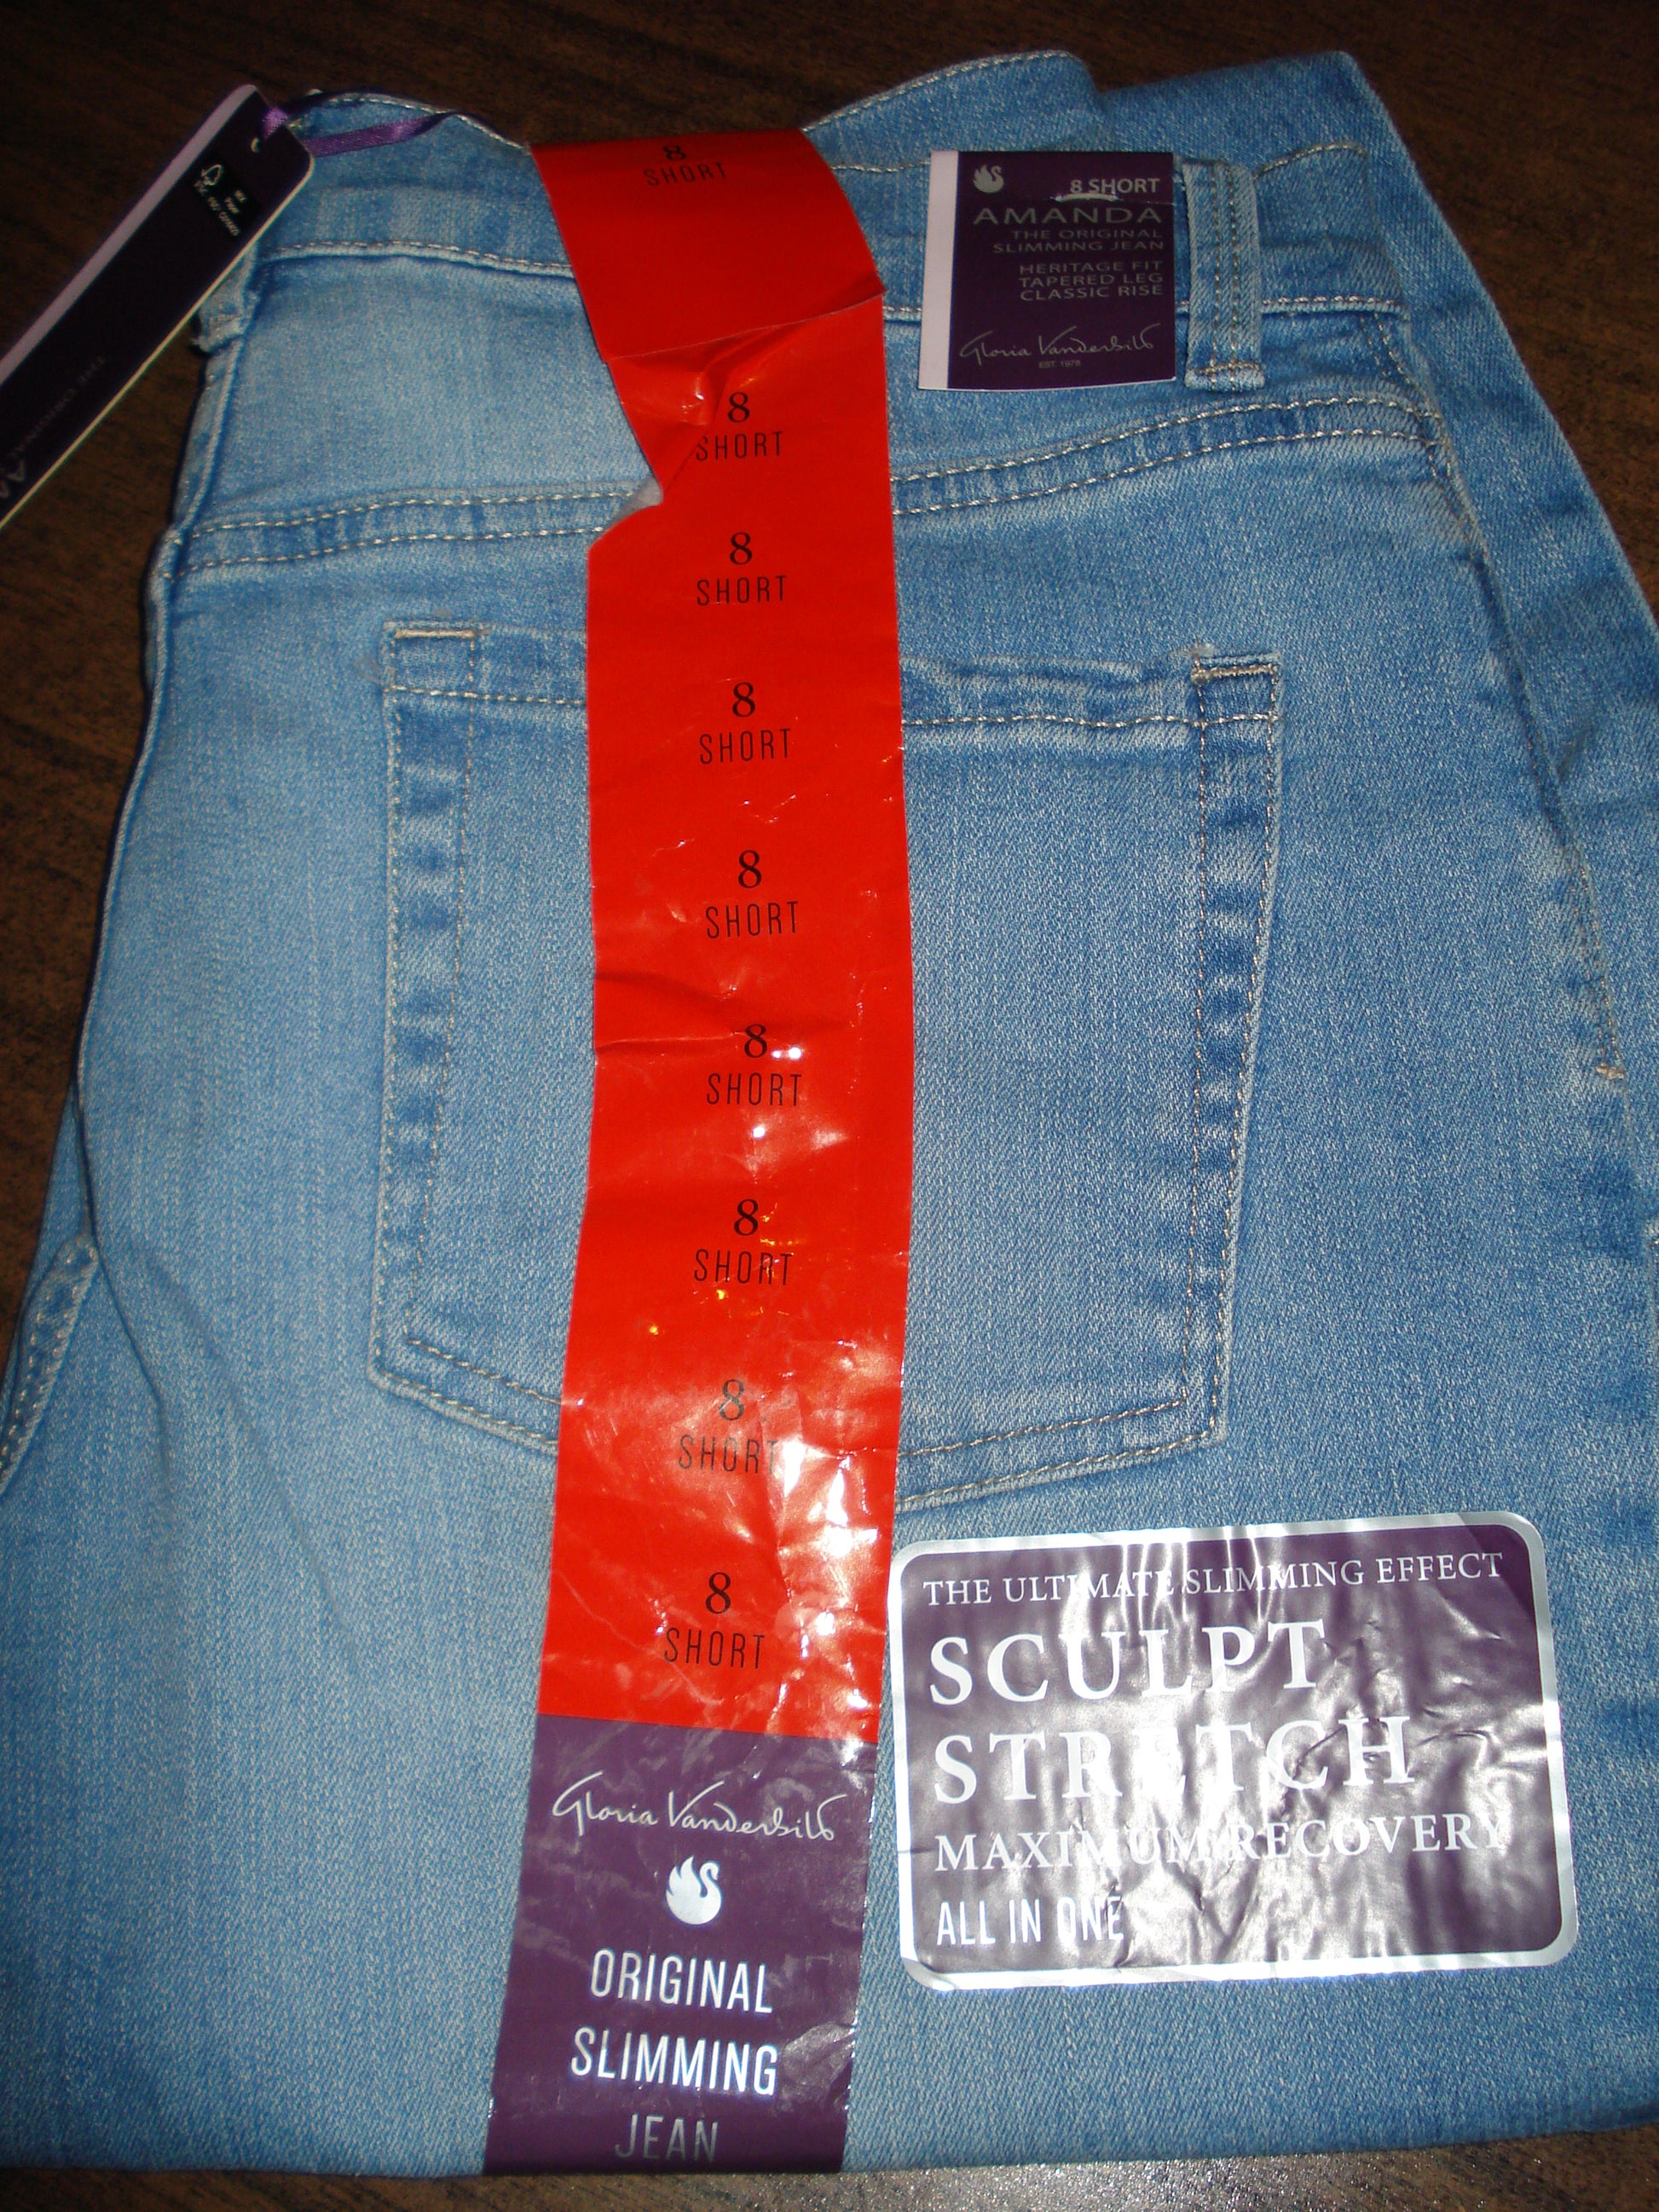 Gloria Vanderbilt Amanda Tapered Jeans, Average Length. Rain Cloud Size  MSRP $45